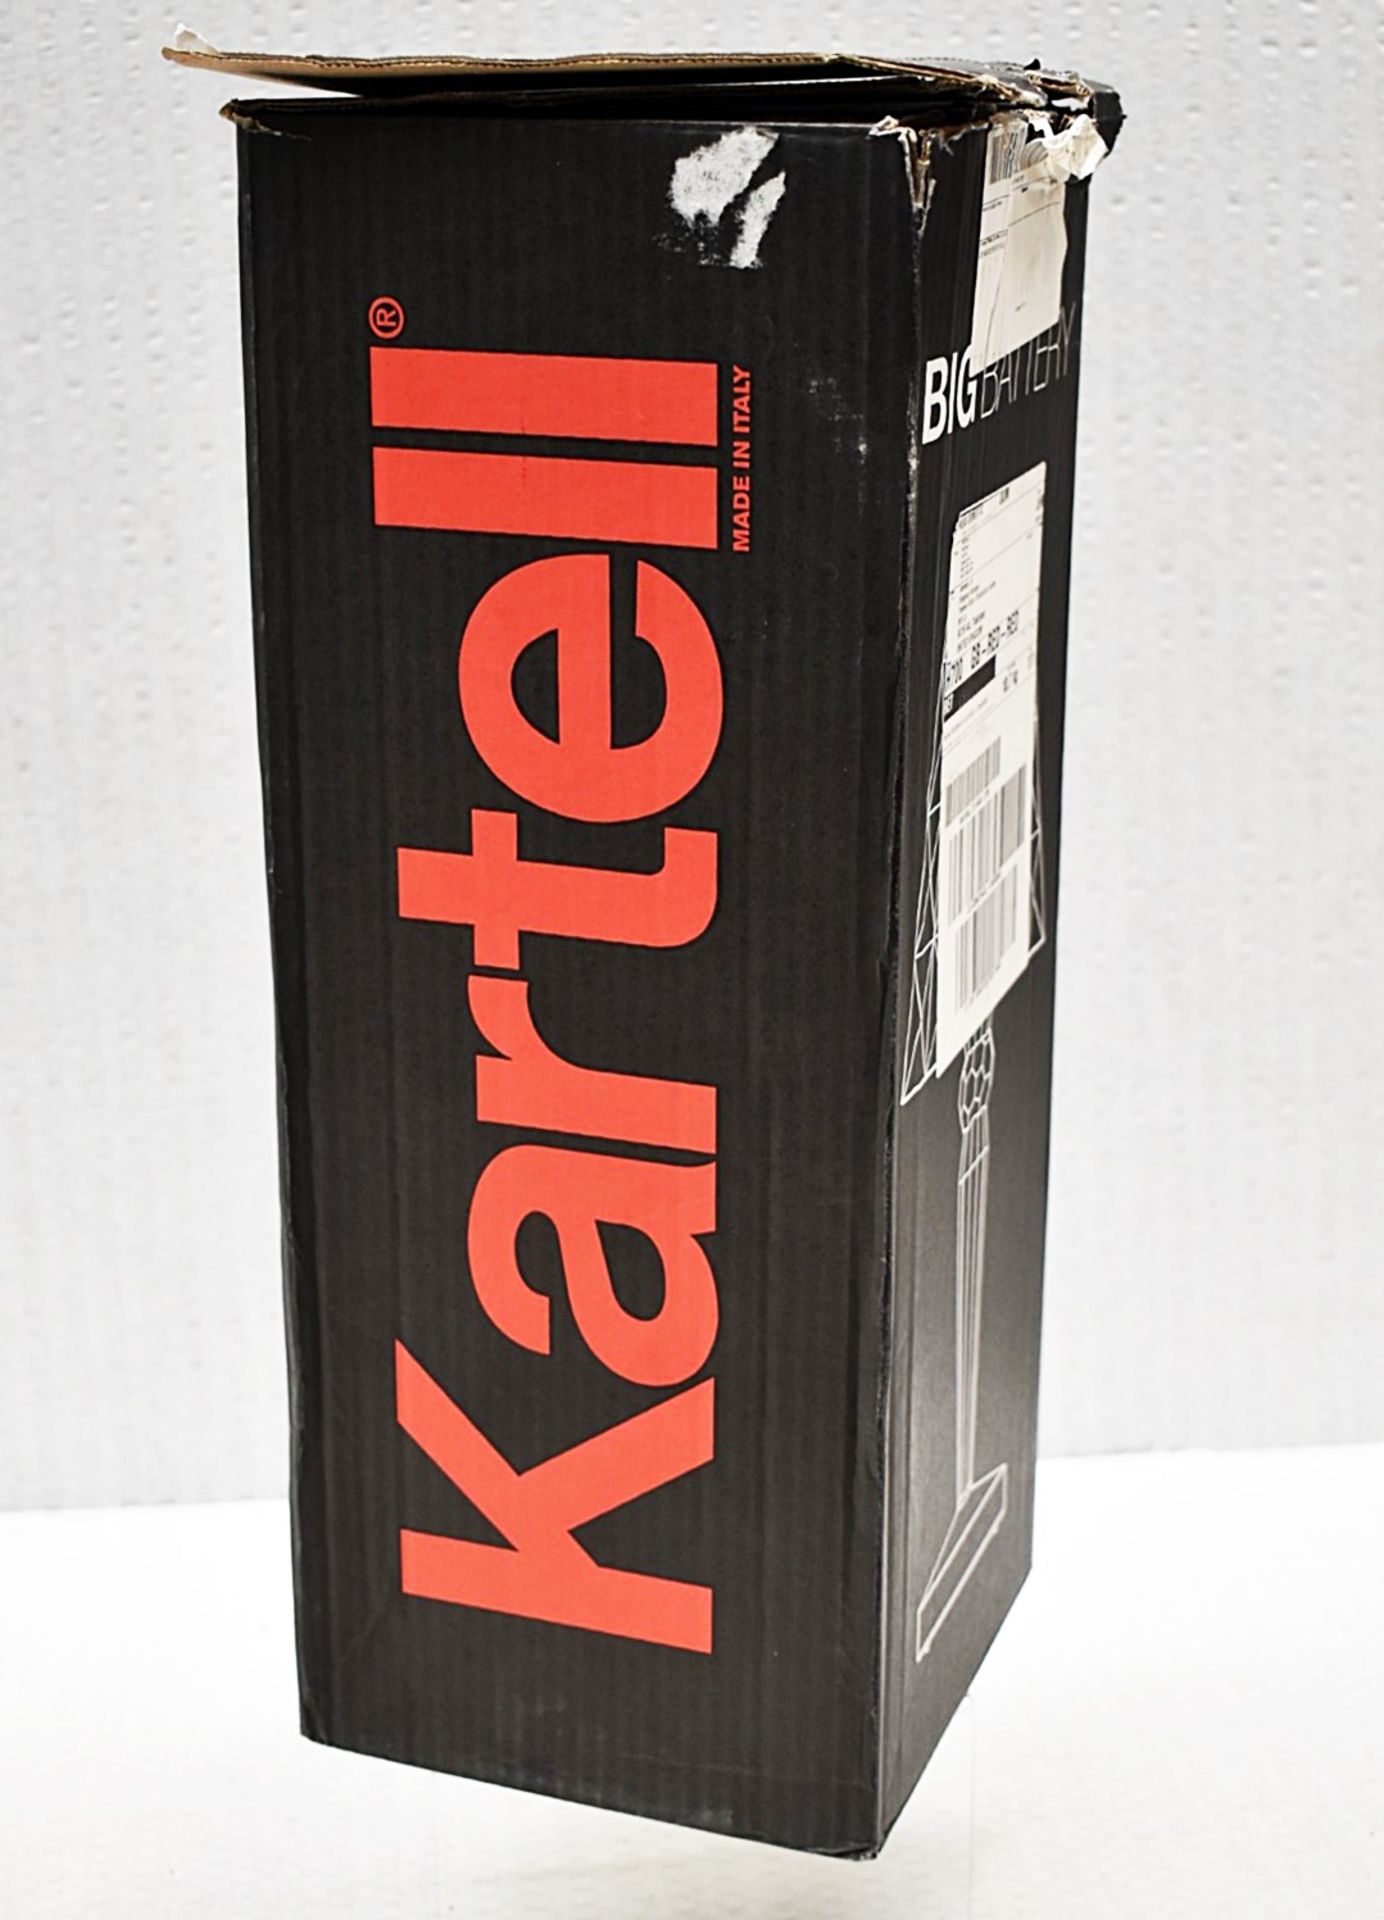 1 x KARTELL 'Big Battery' Designer Table Lamp  - Original Price £200.00 - Unused Boxed Stock - Image 12 of 12